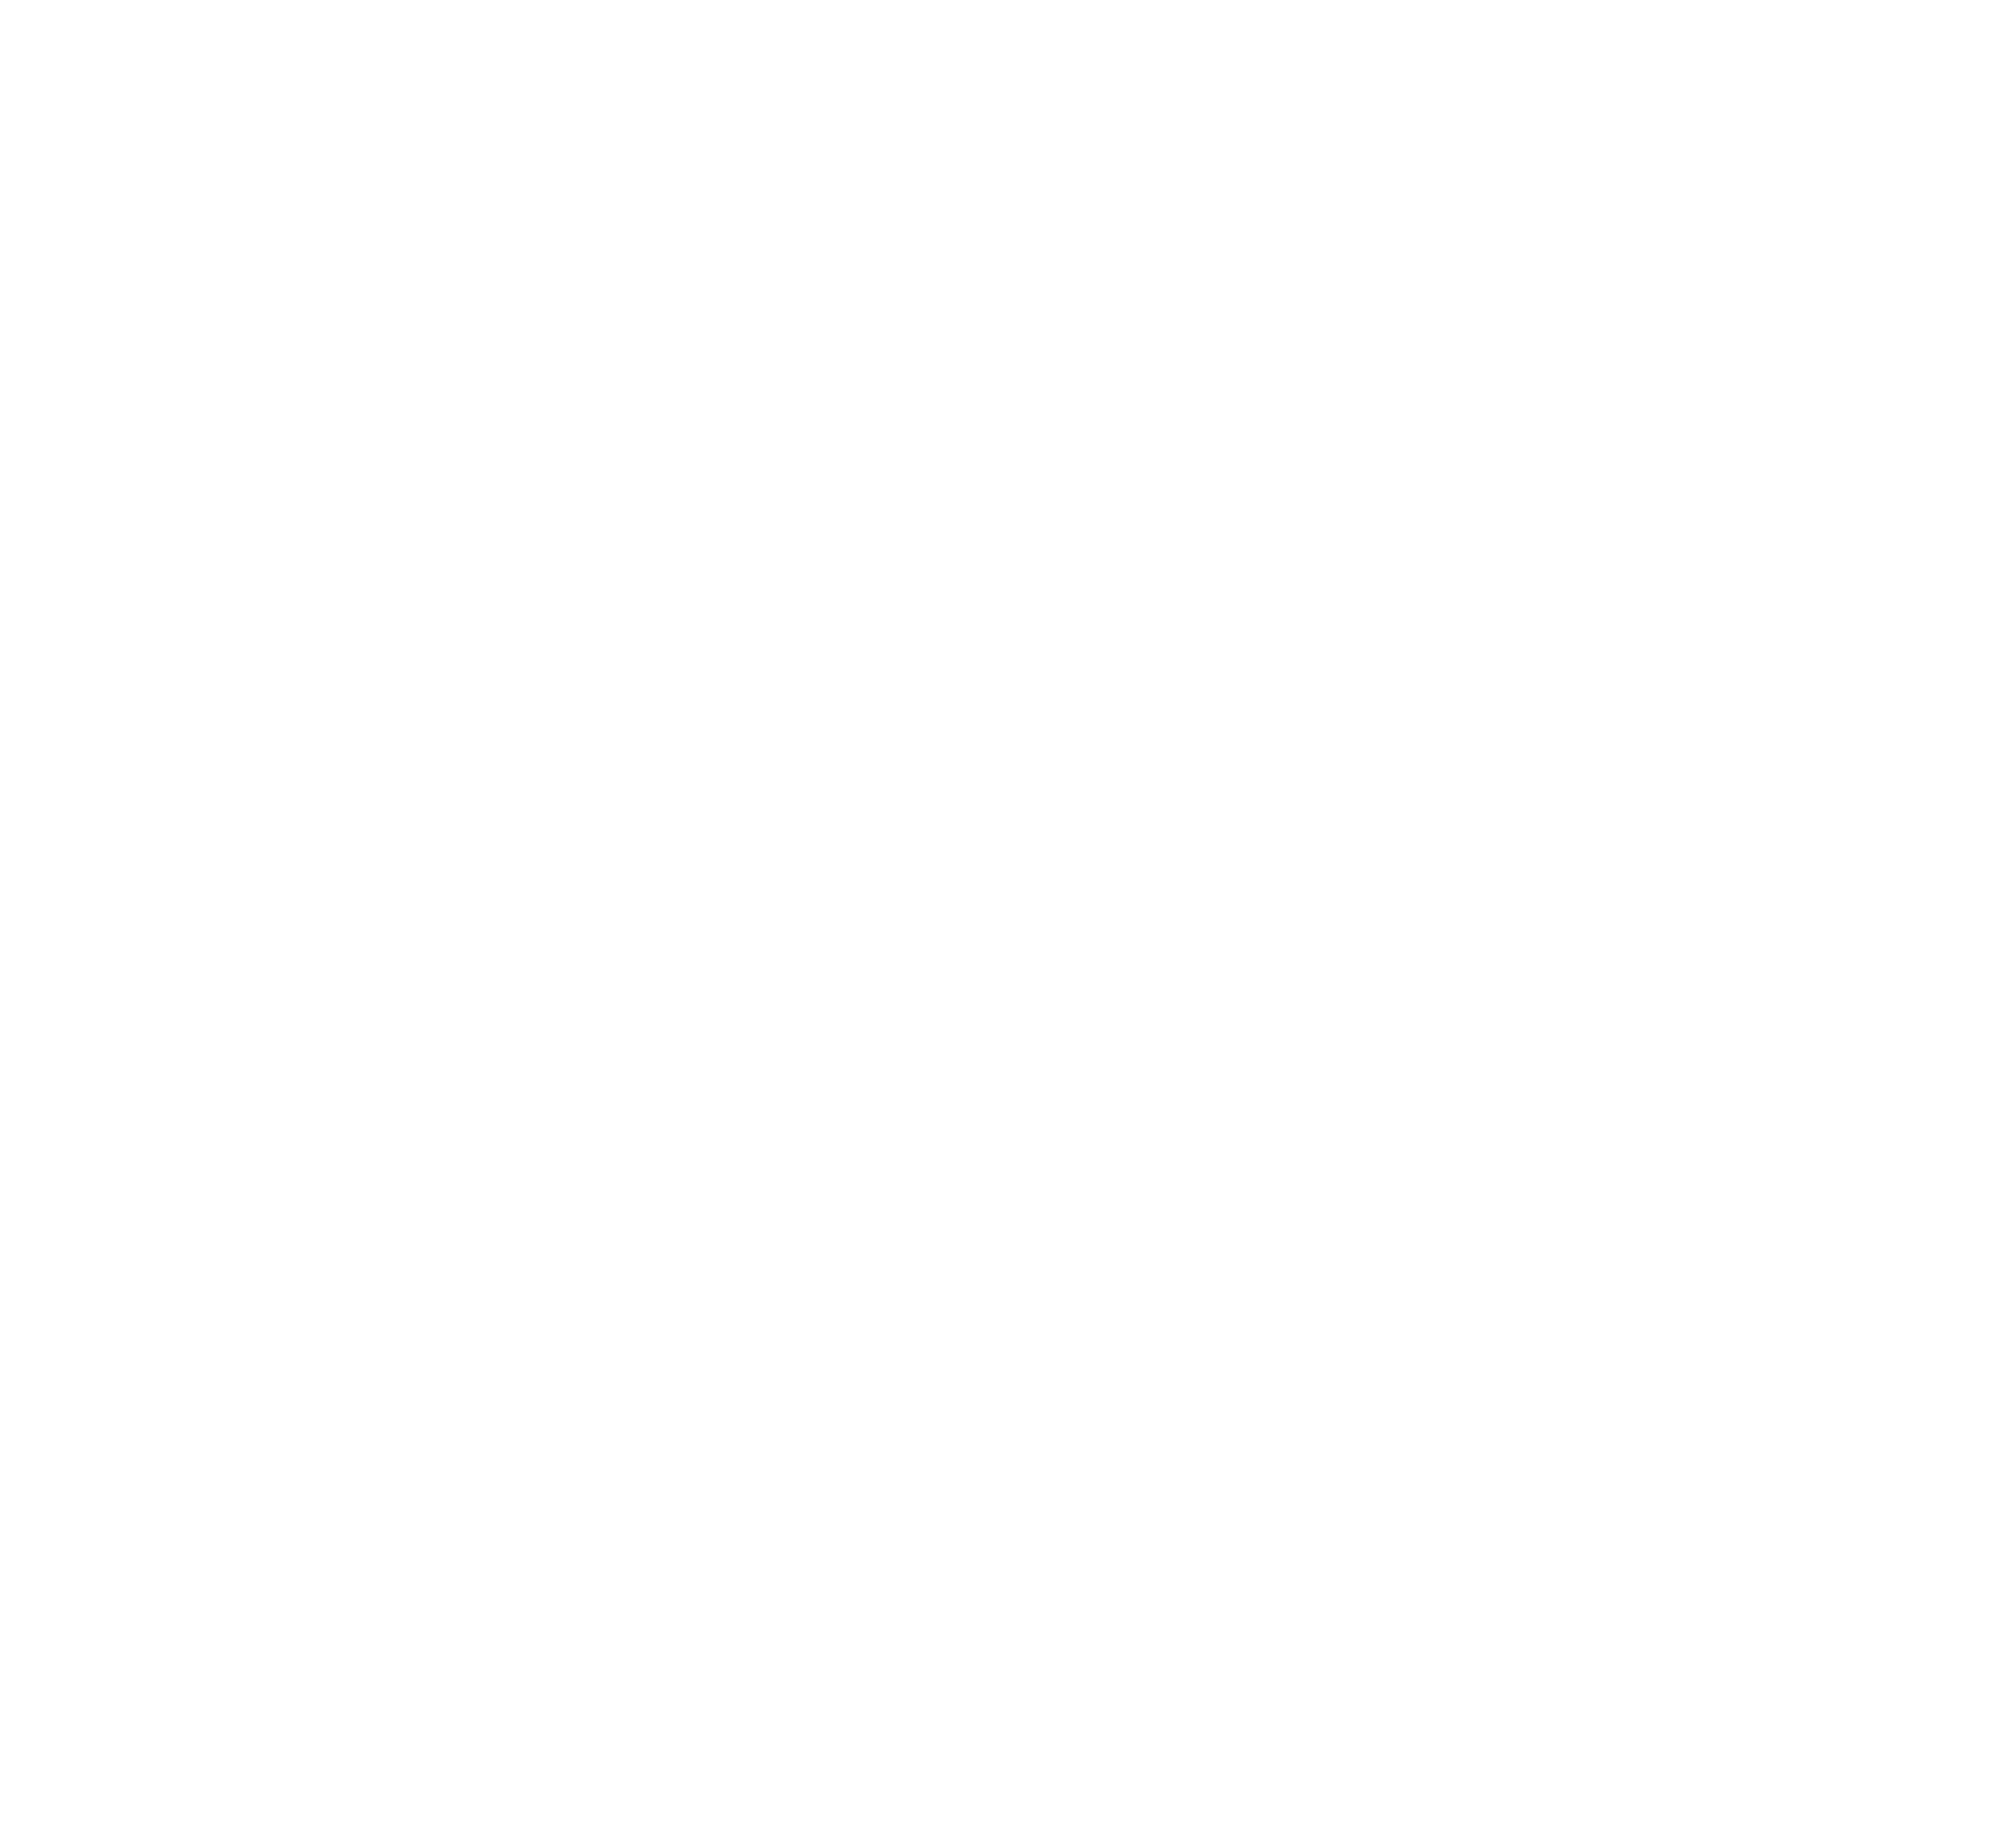 Lisa Chastain